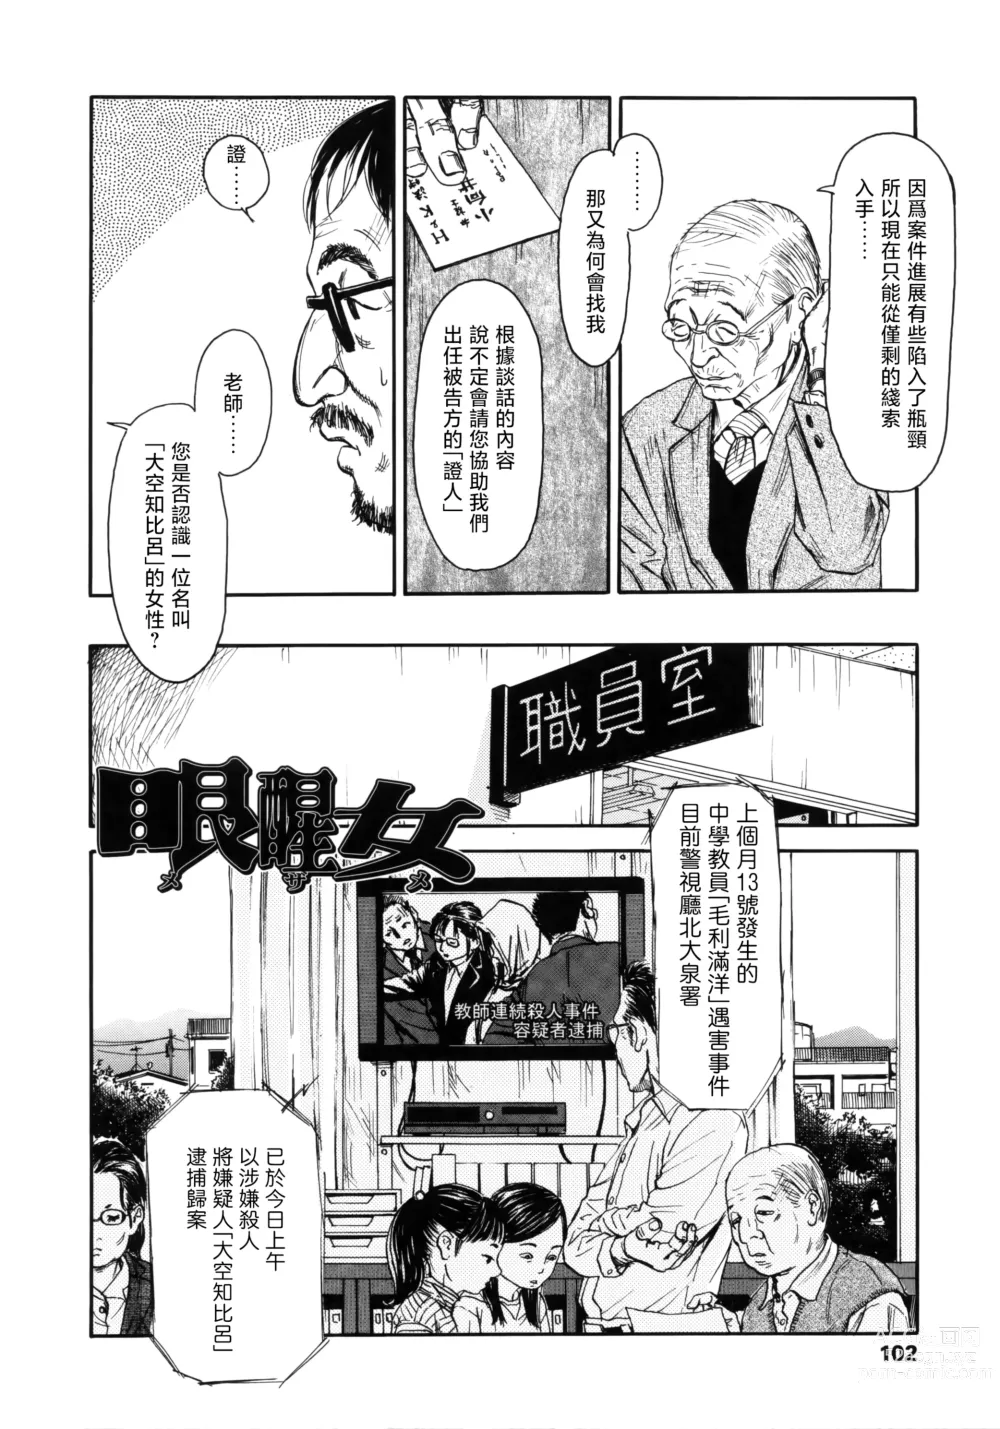 Page 2 of manga Mezame